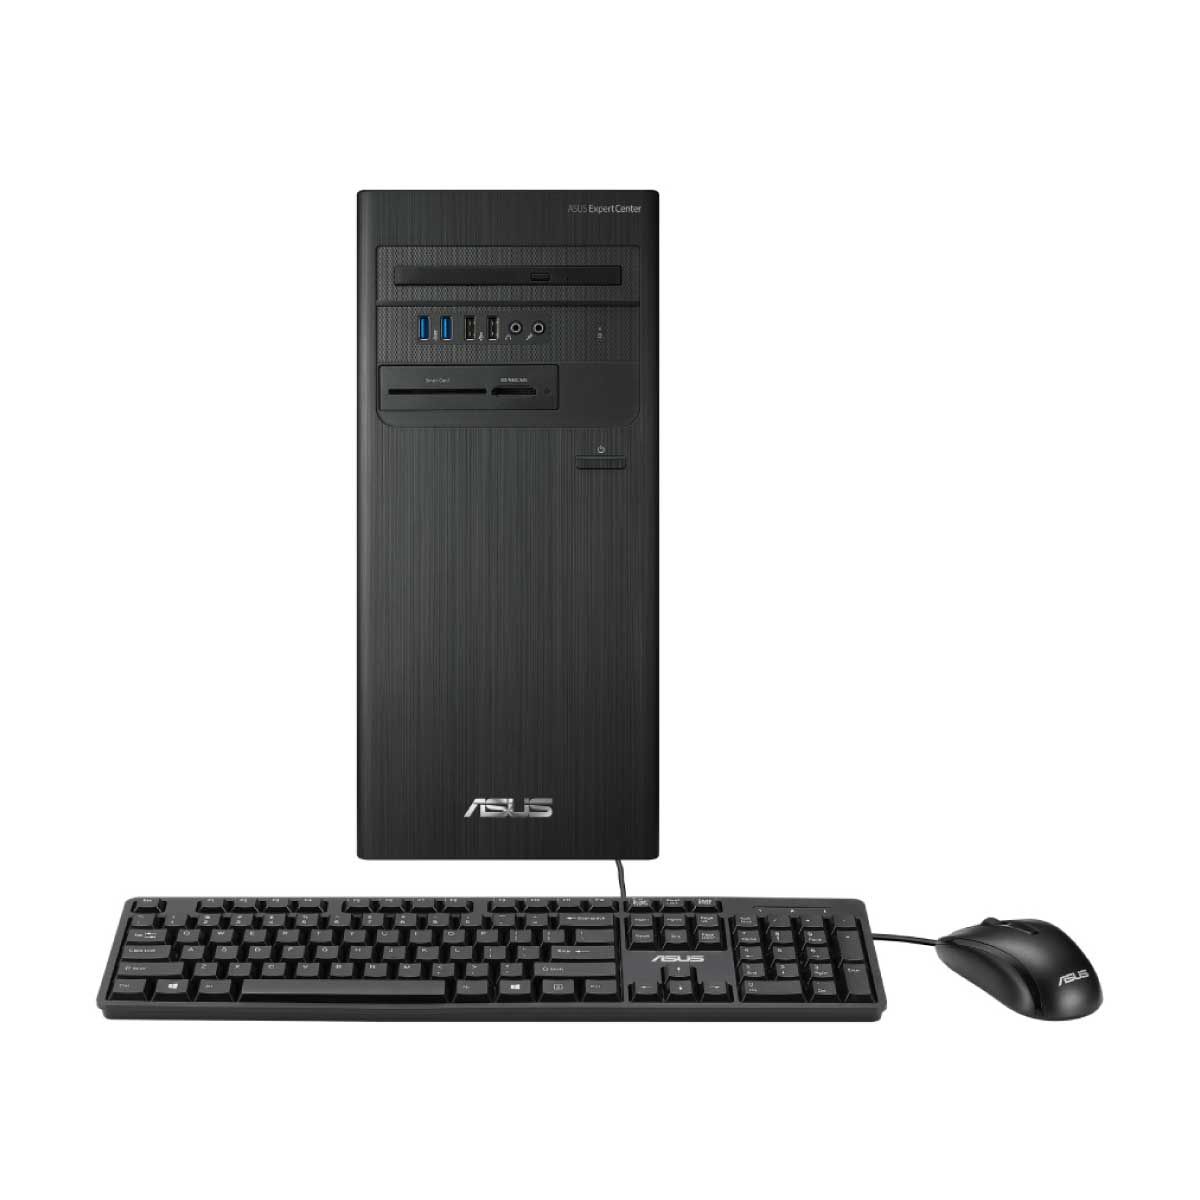 DESKTOP PC (คอมพิวเตอร์ตั้งโต๊ะ) ASUS S500TE-513400007W